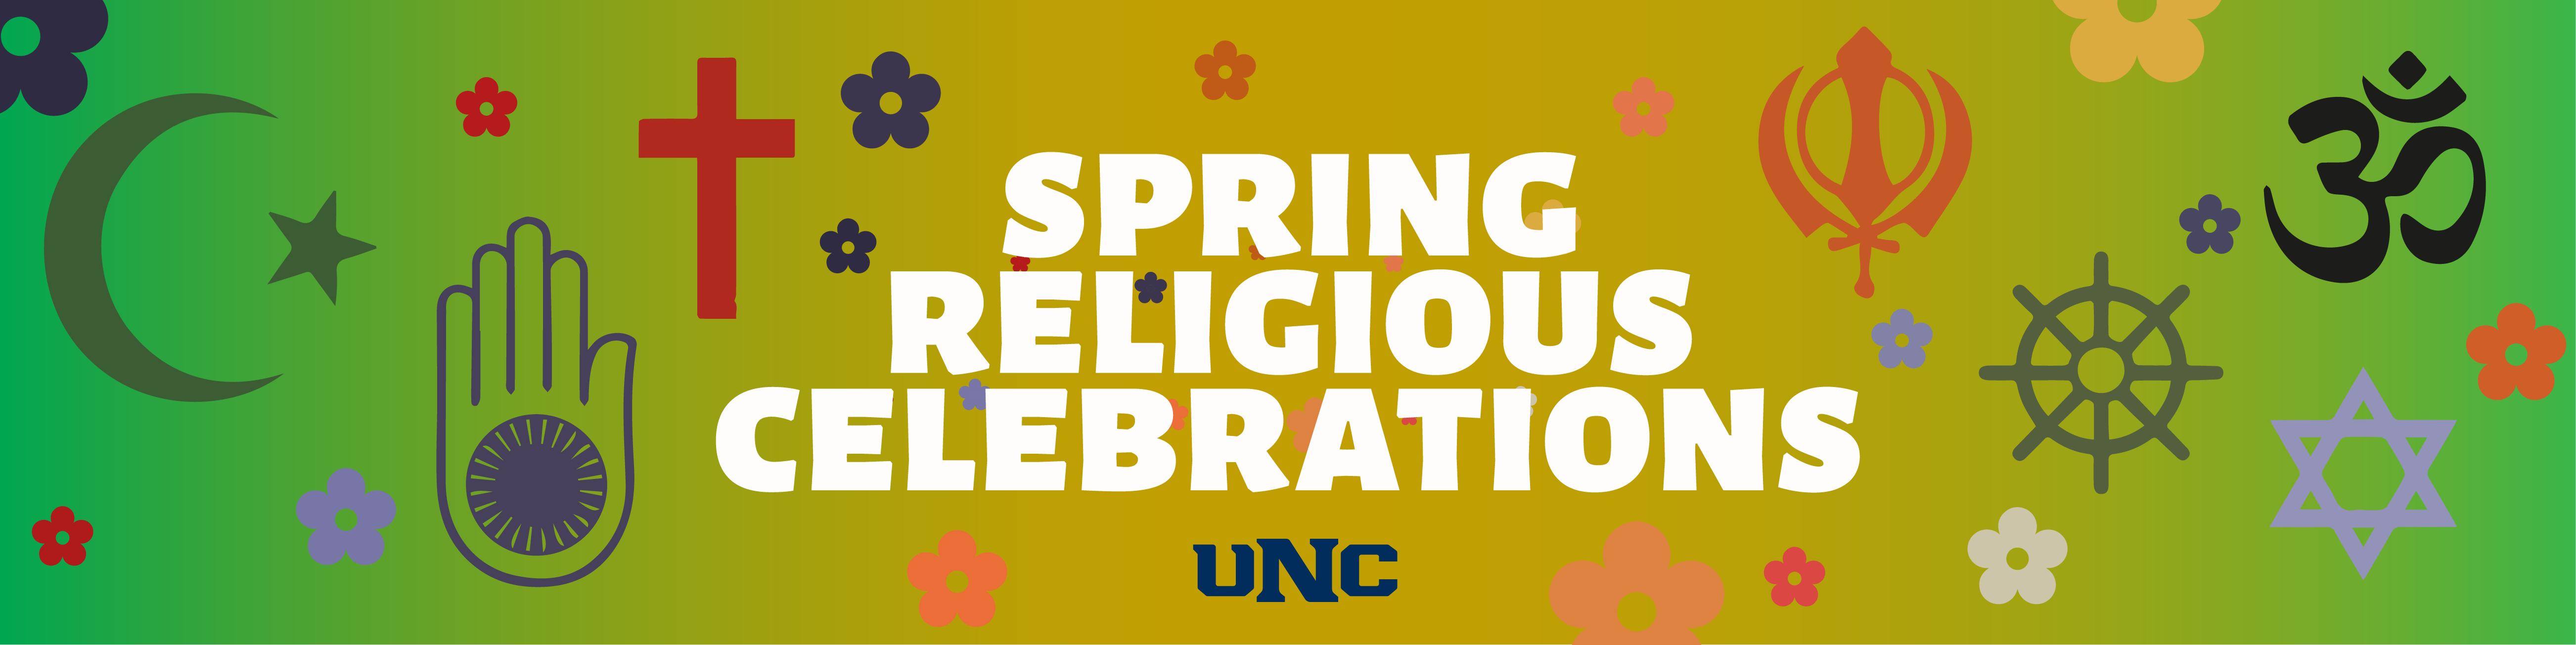 spring religious celebrations 